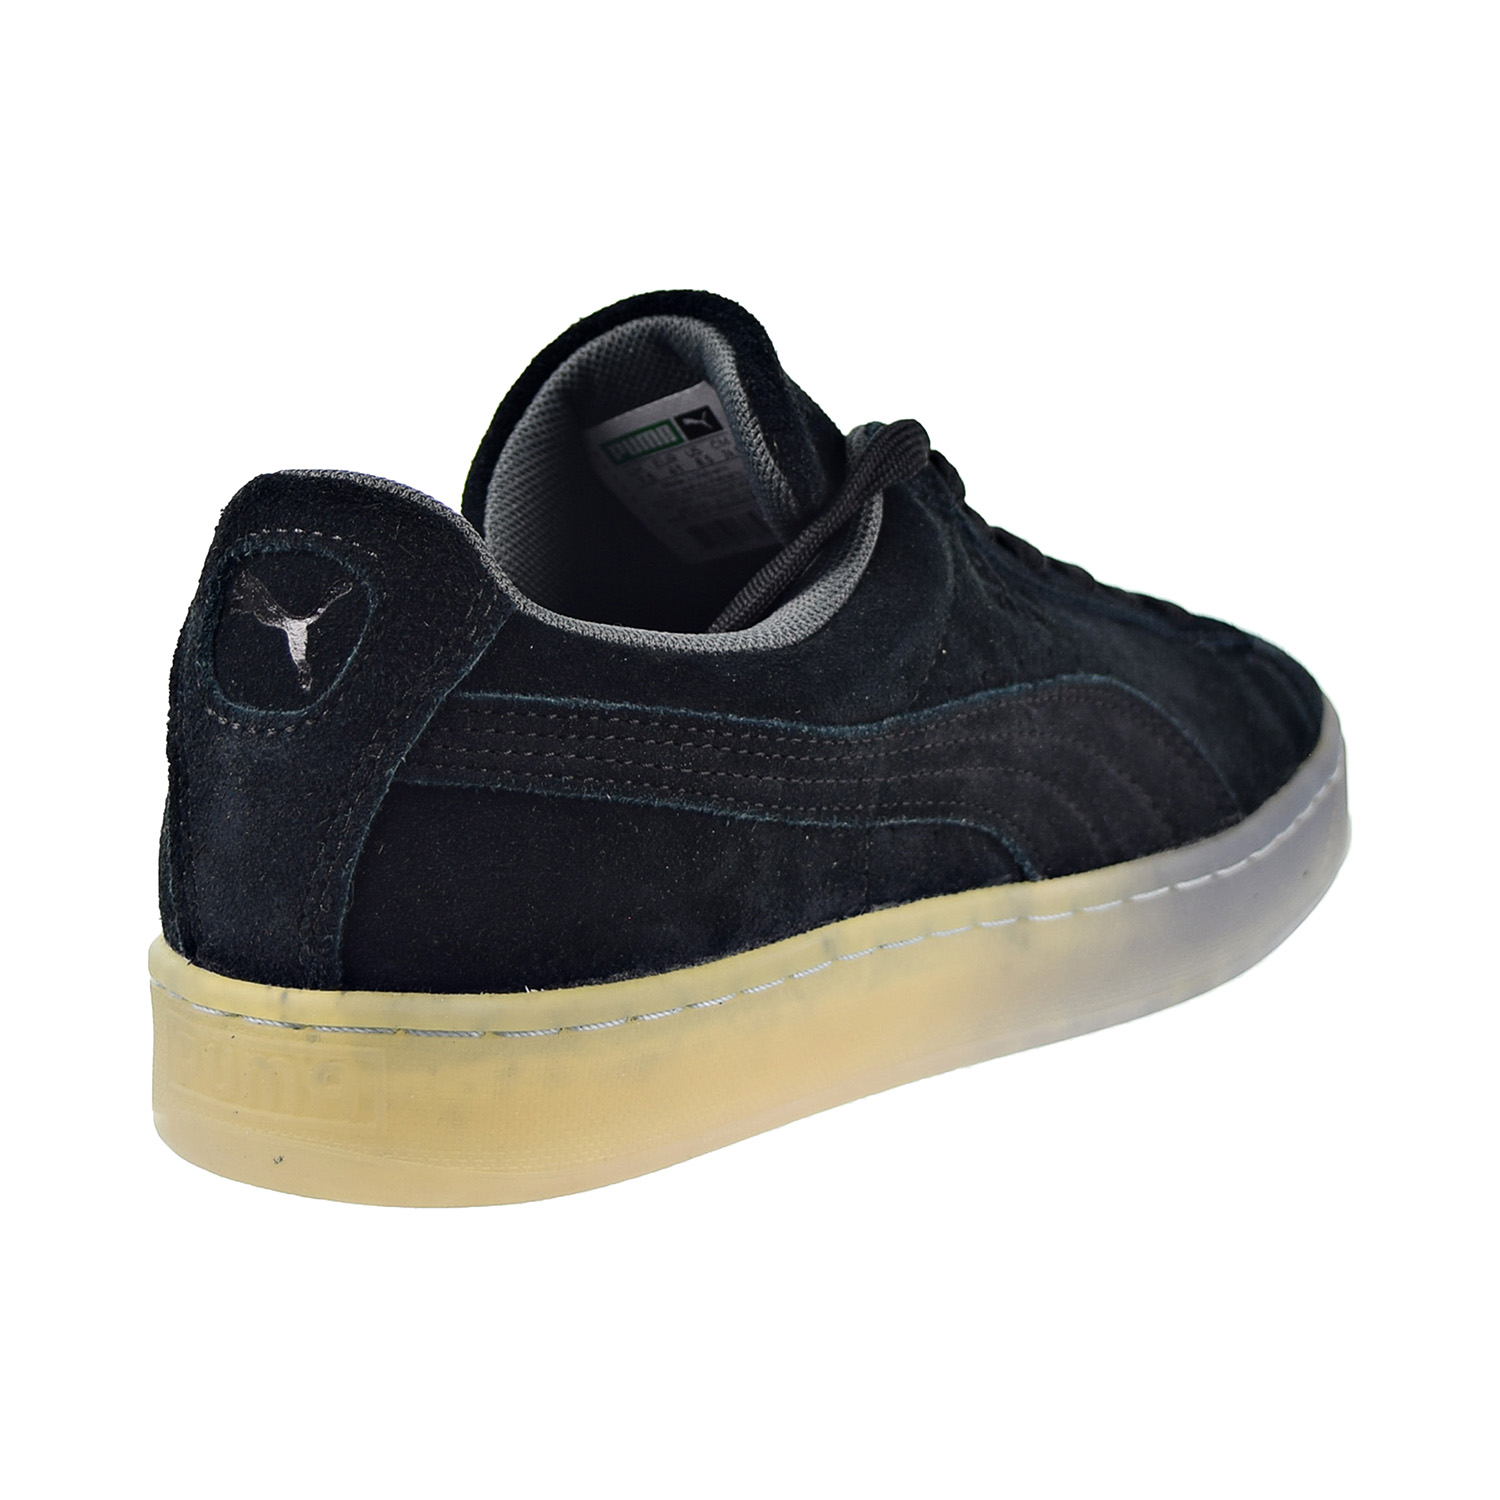 Puma Suede Classic Fade Future Men's Shoes Black 361351-02 - image 3 of 6